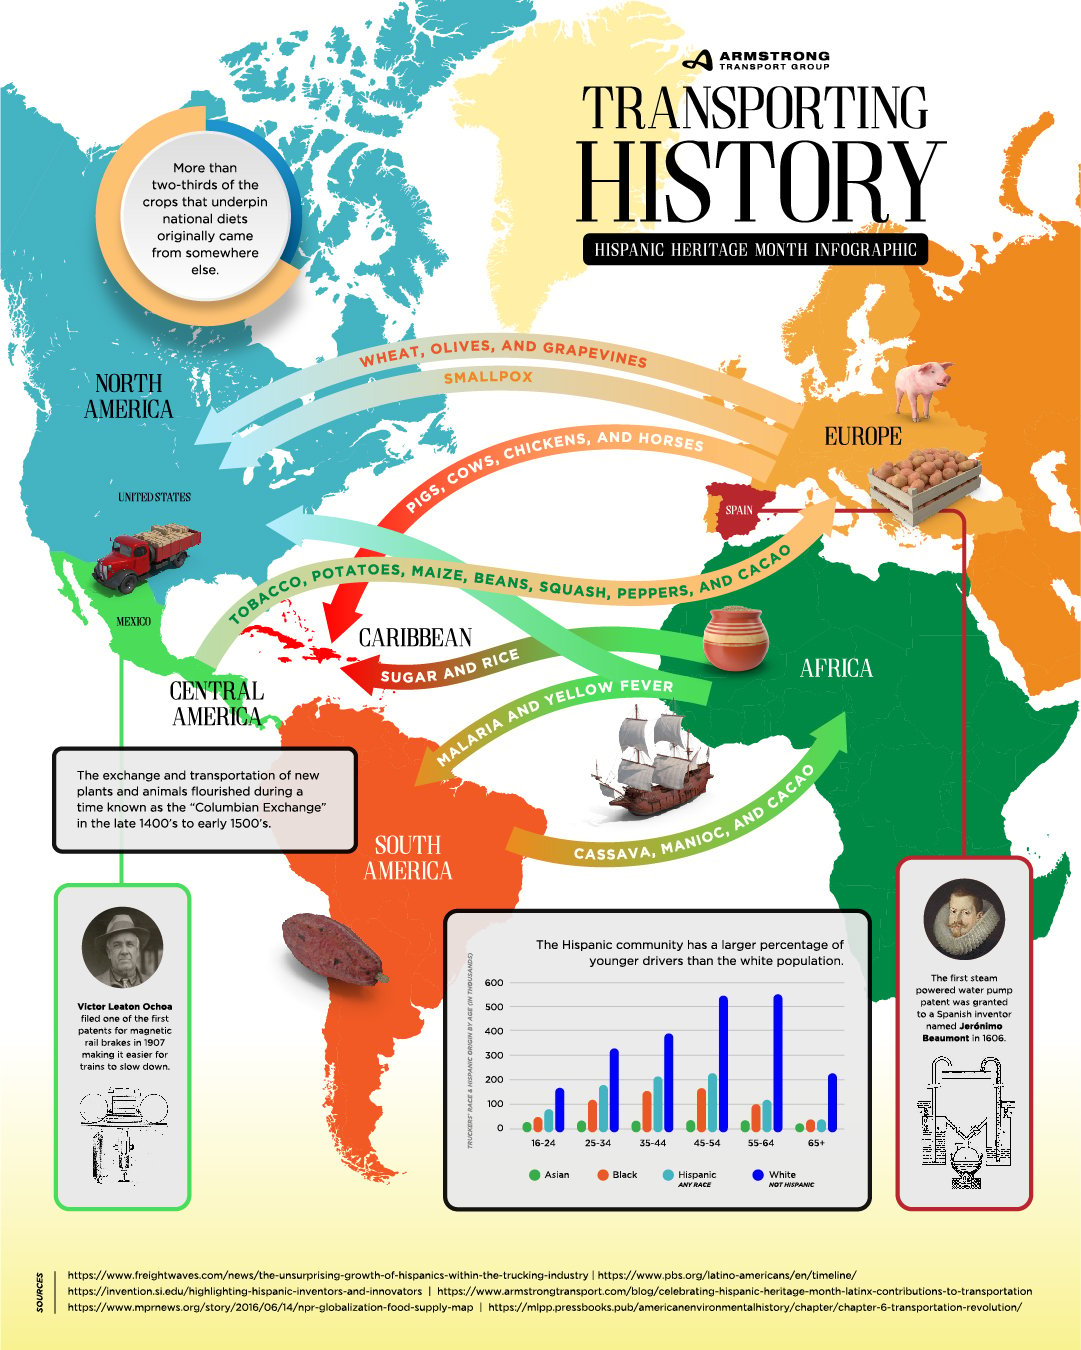 3701_Hispanic Heritage Month Infographic_D1R1